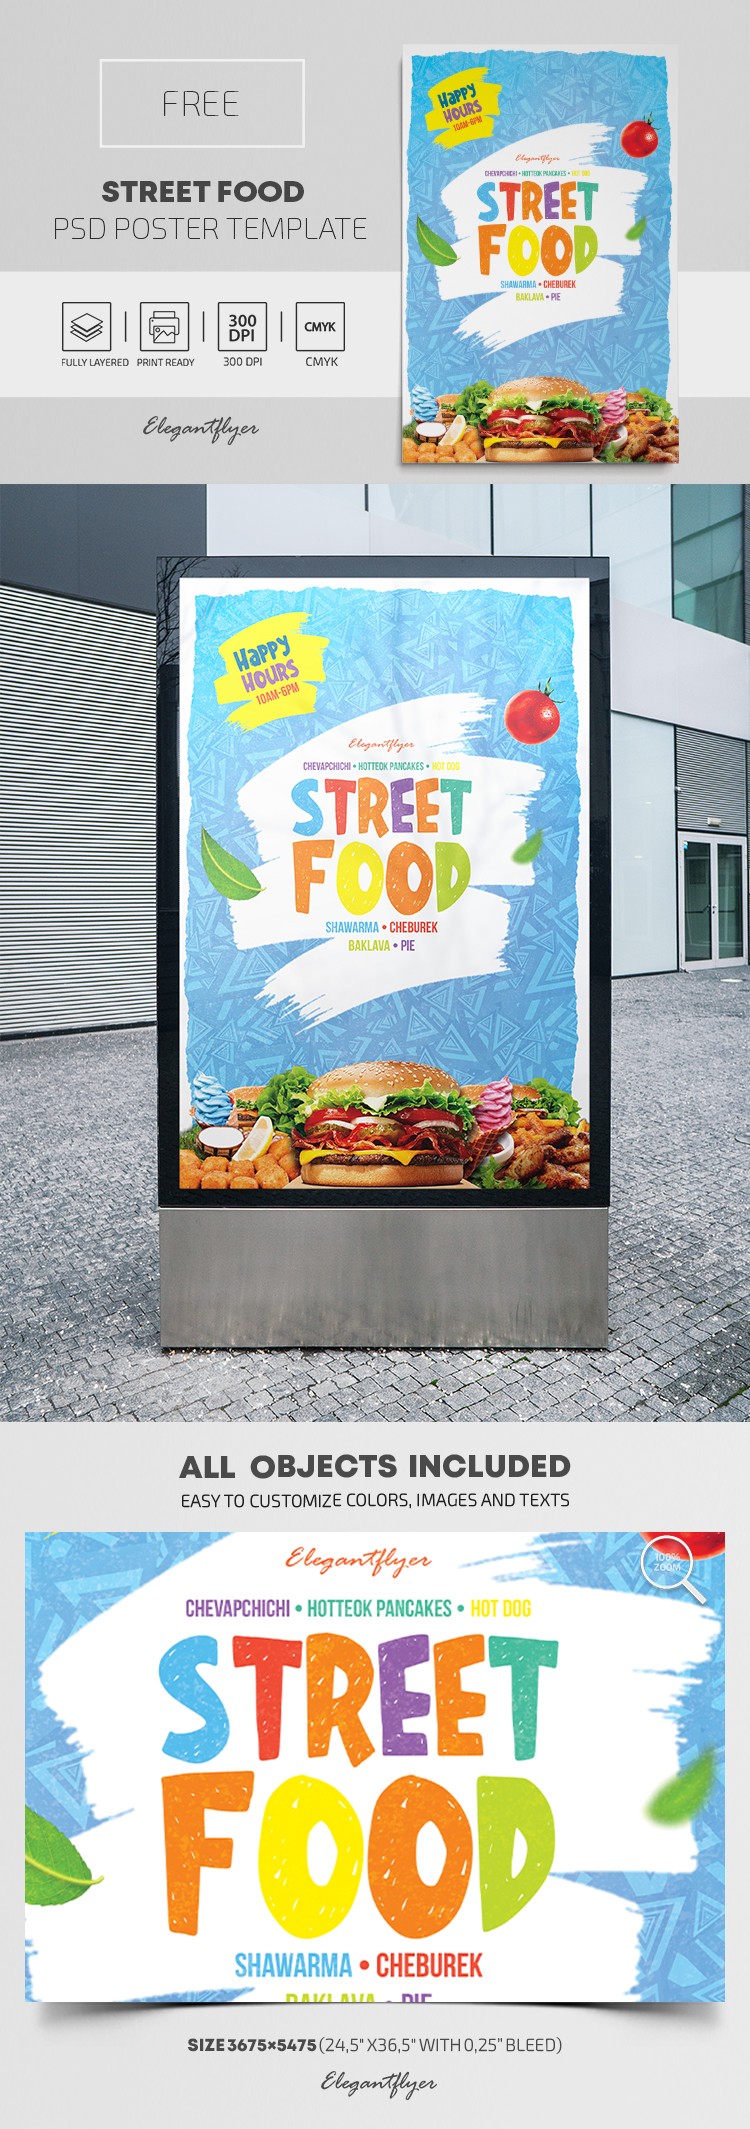 Street Food Poster by ElegantFlyer